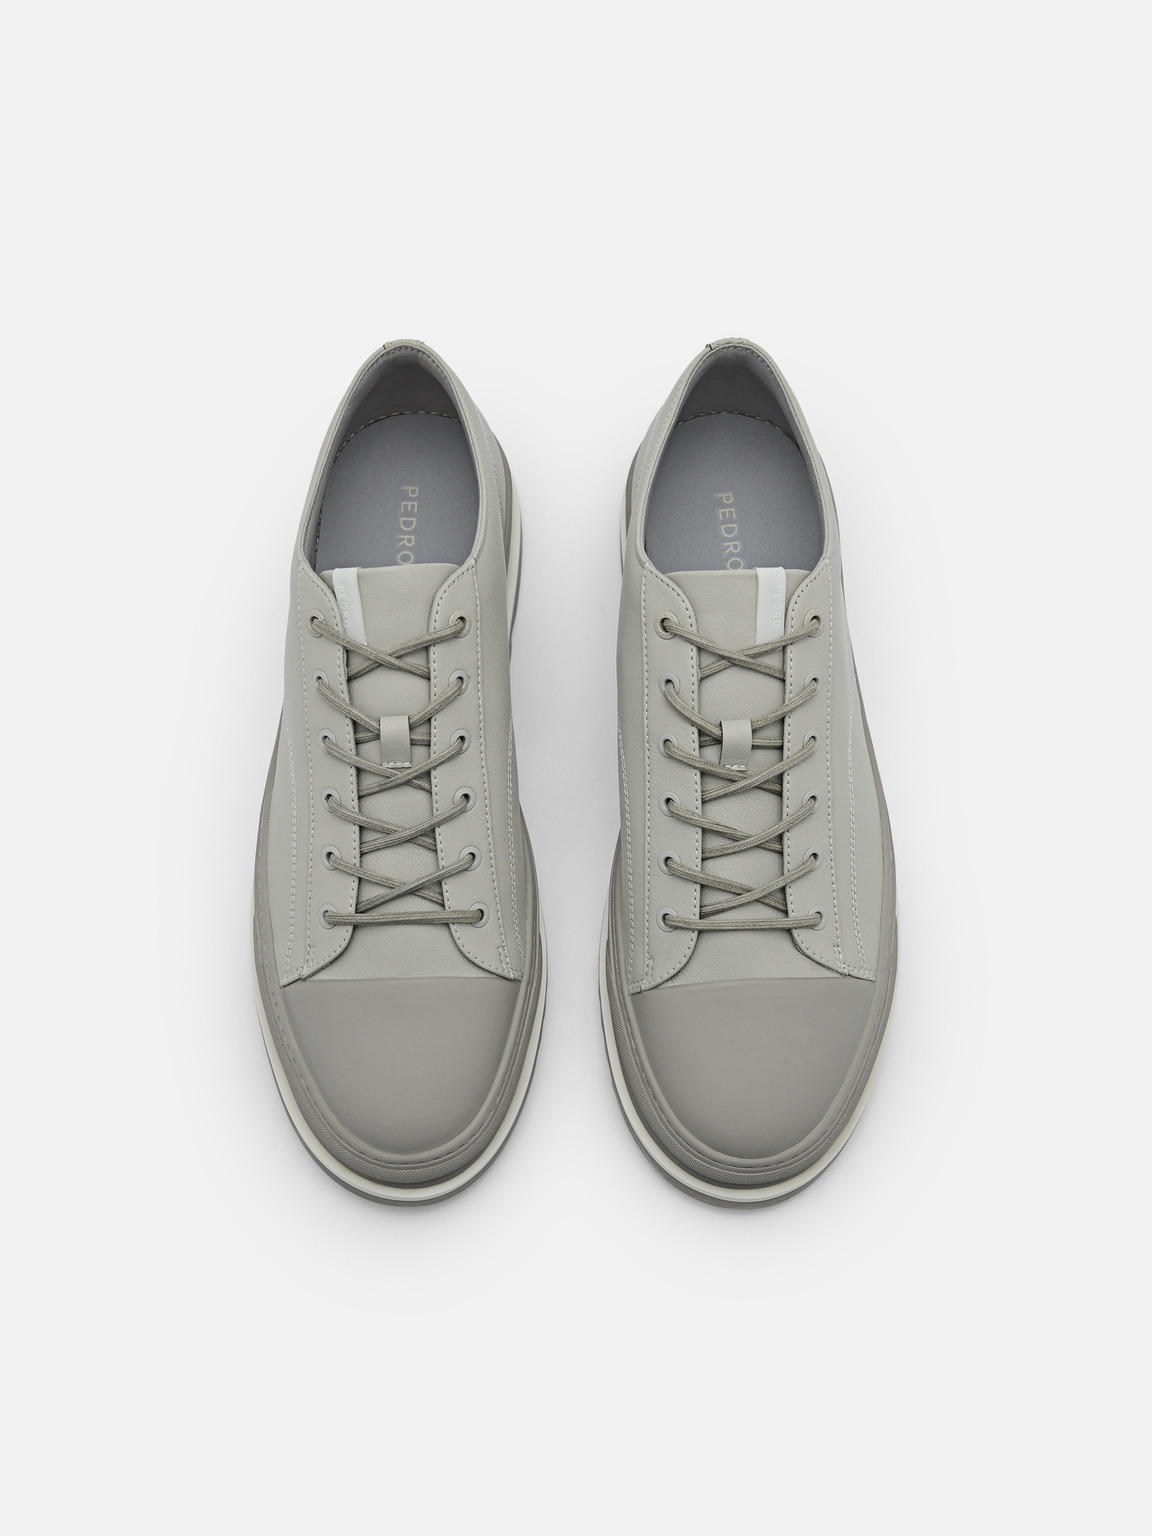 Owen球鞋, 浅灰色